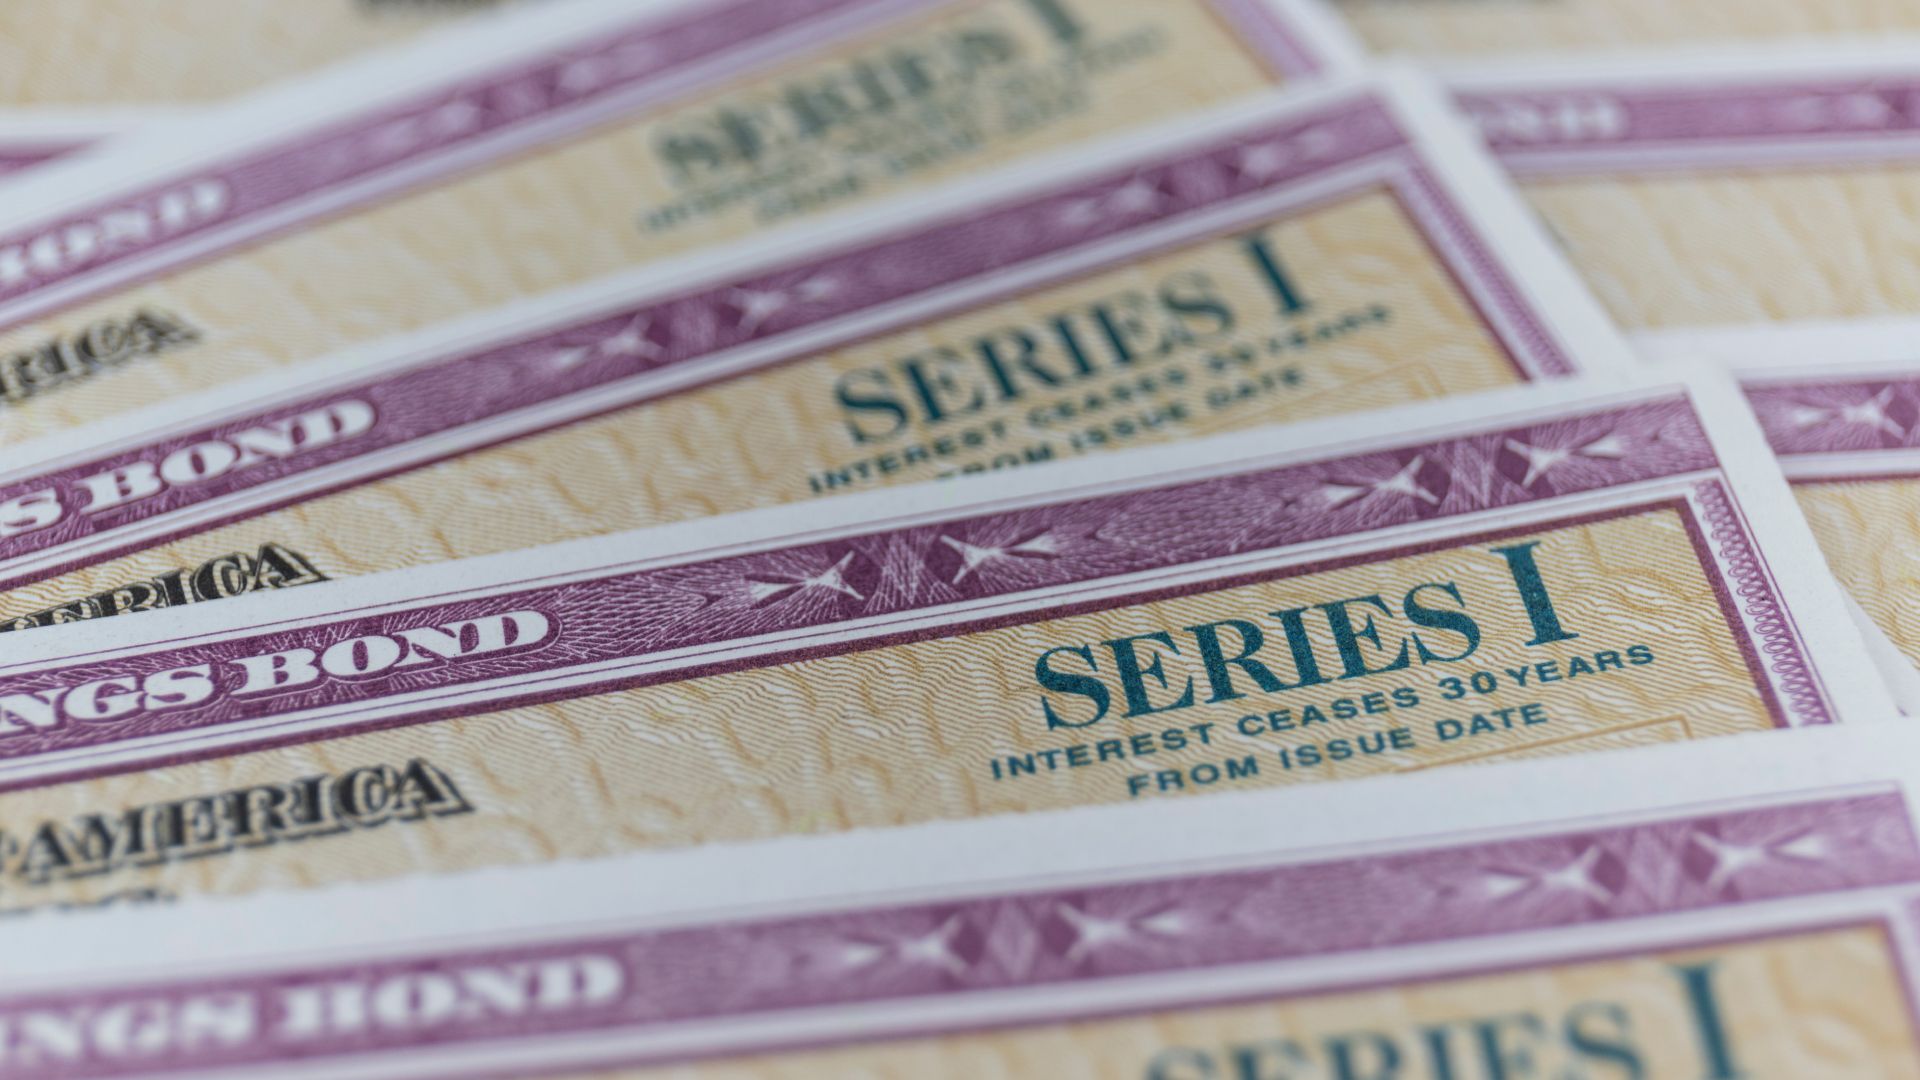 Stack of series 1 savings bonds.